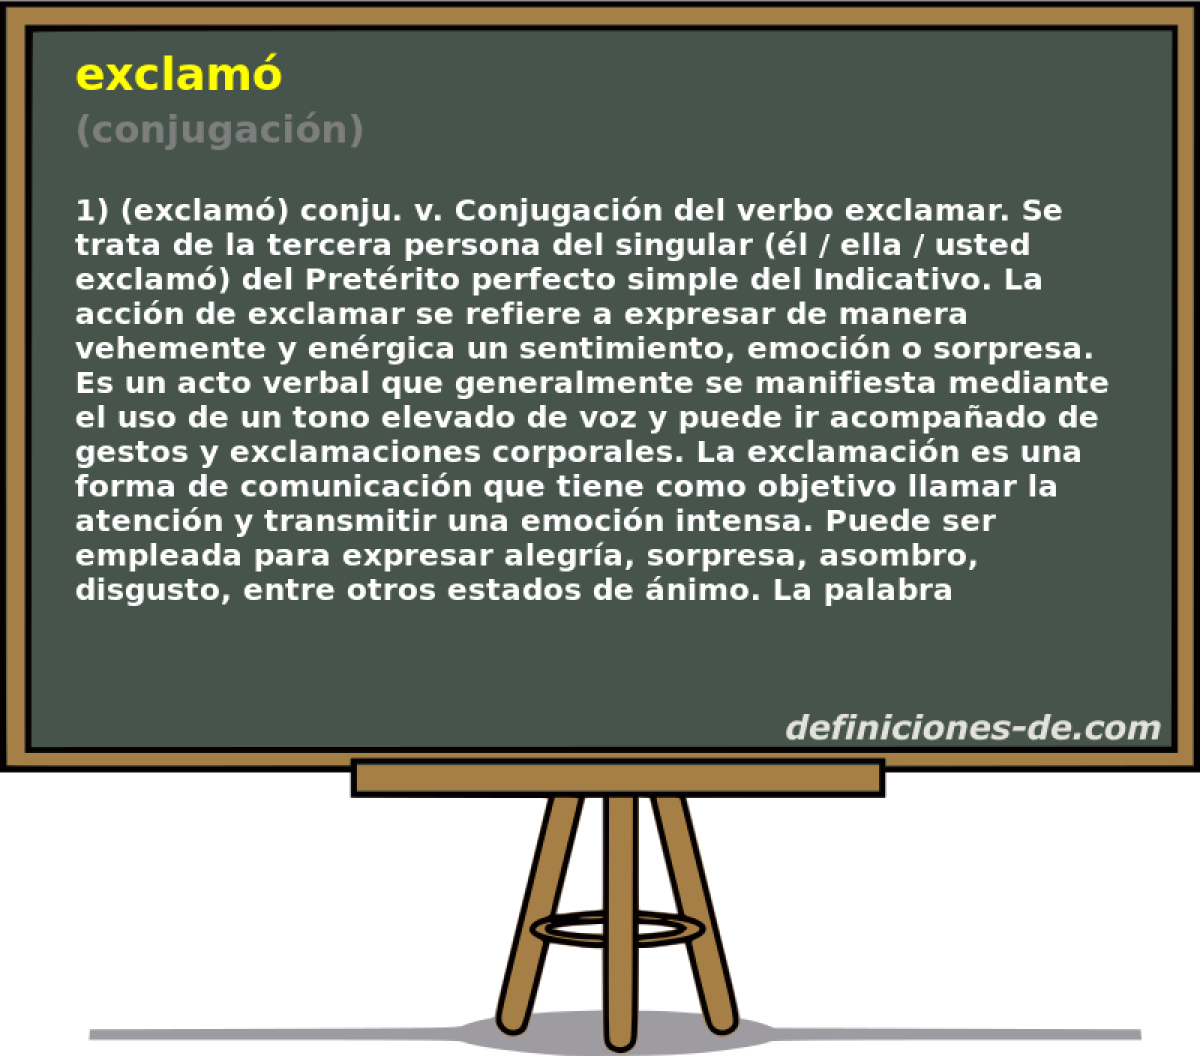 exclam (conjugacin)